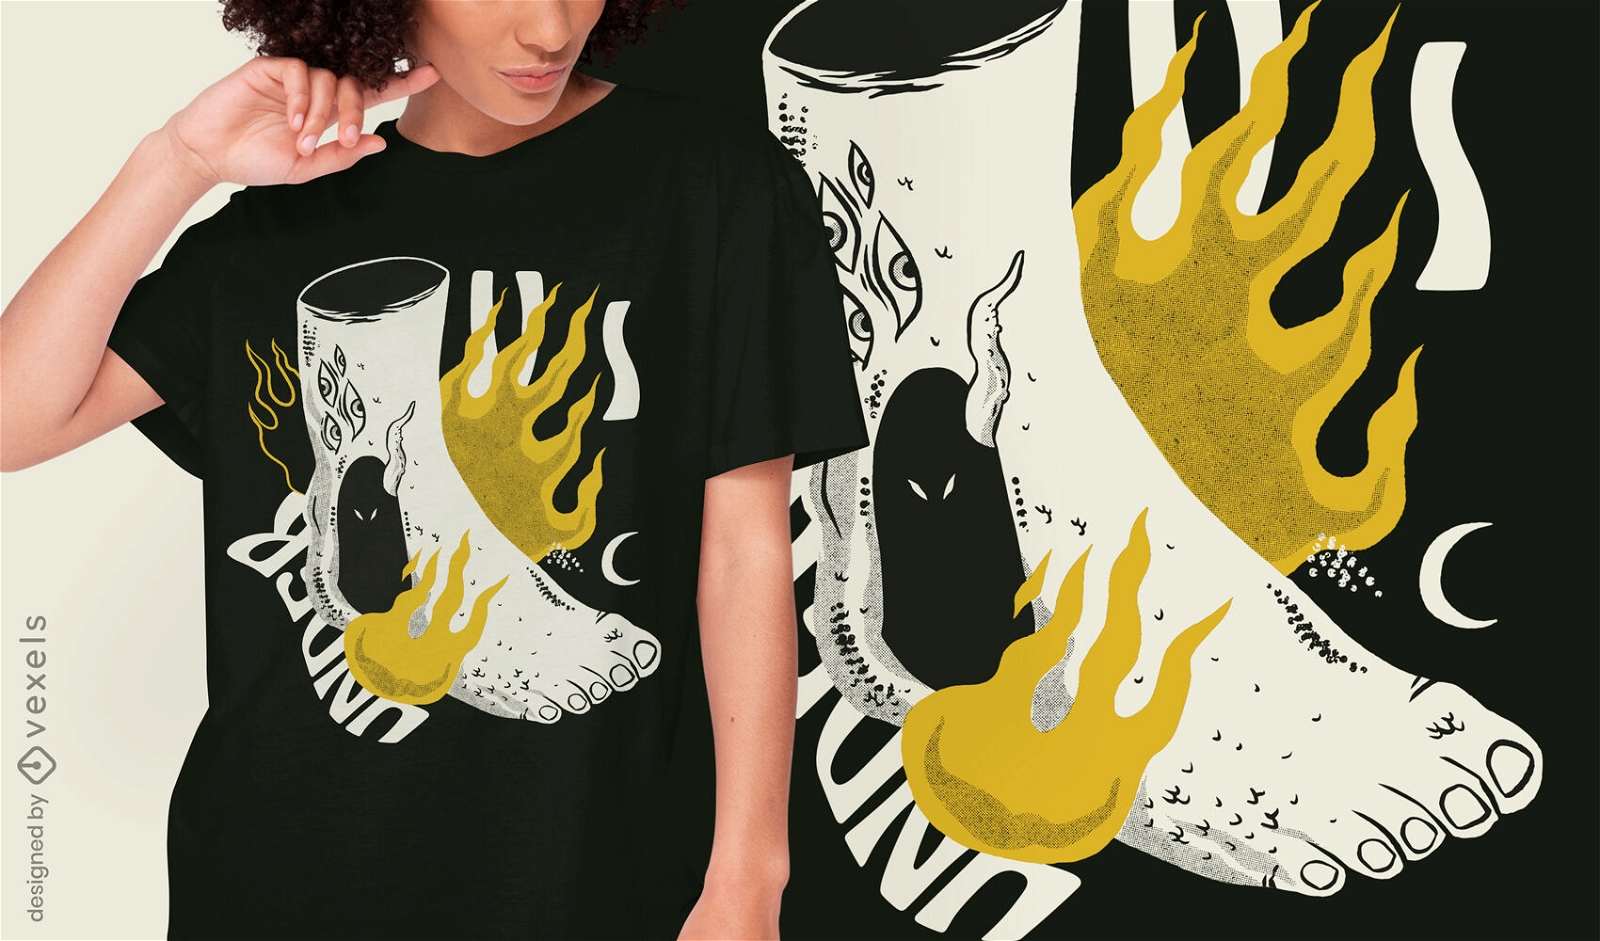 Bizarro body foot on fire diseño de camiseta